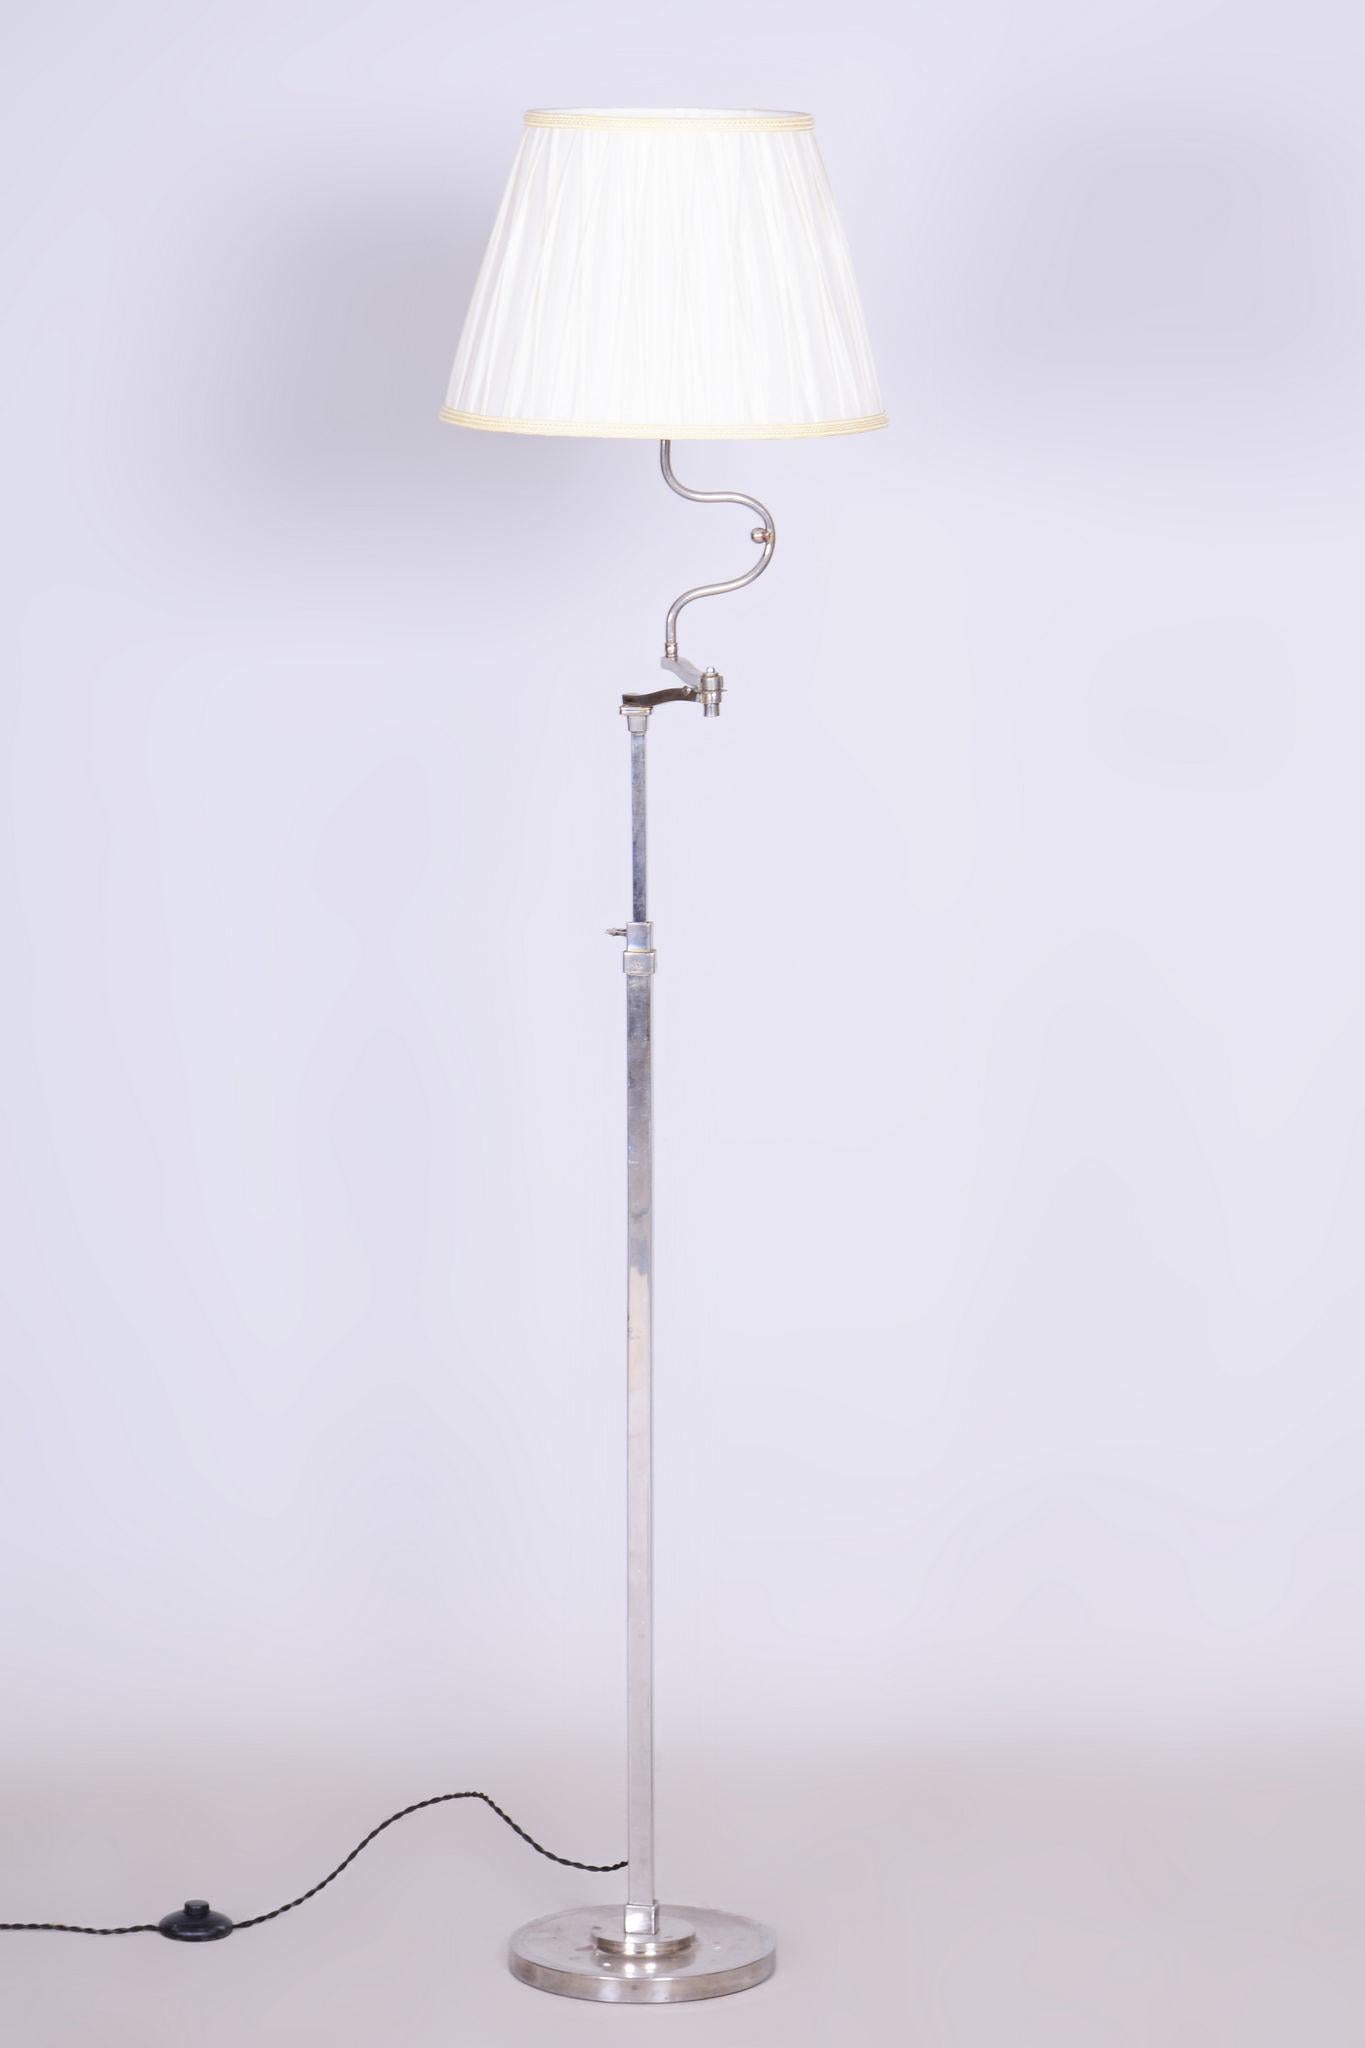 Restored Art Deco Floor Lamp, New Electrification, Chrome, Steel, Czechia, 1920s For Sale 3